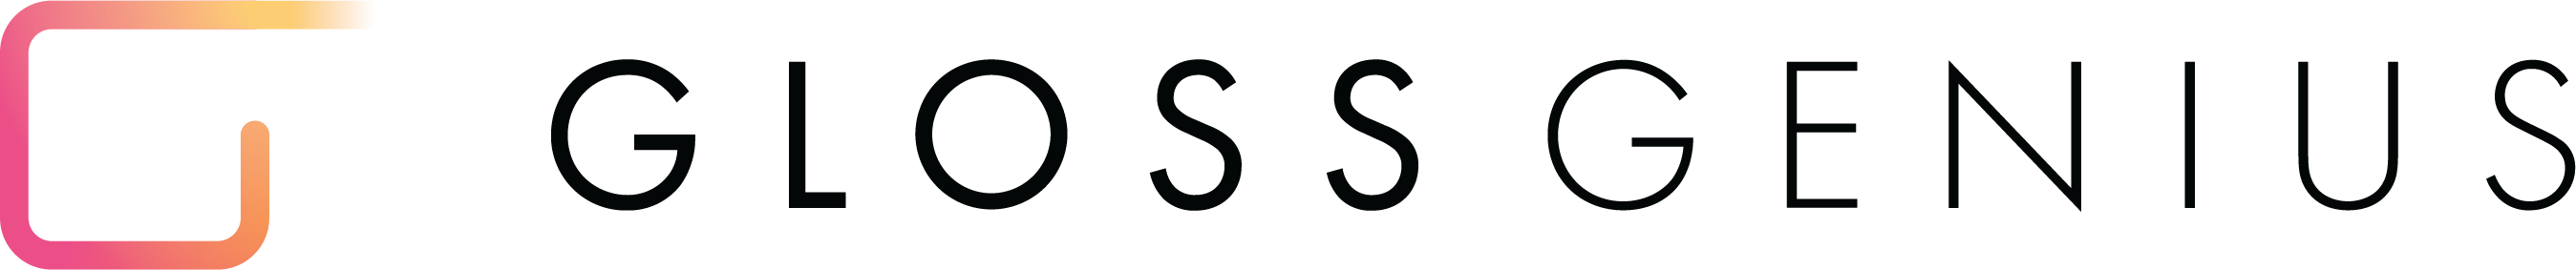 Gloss genius logo